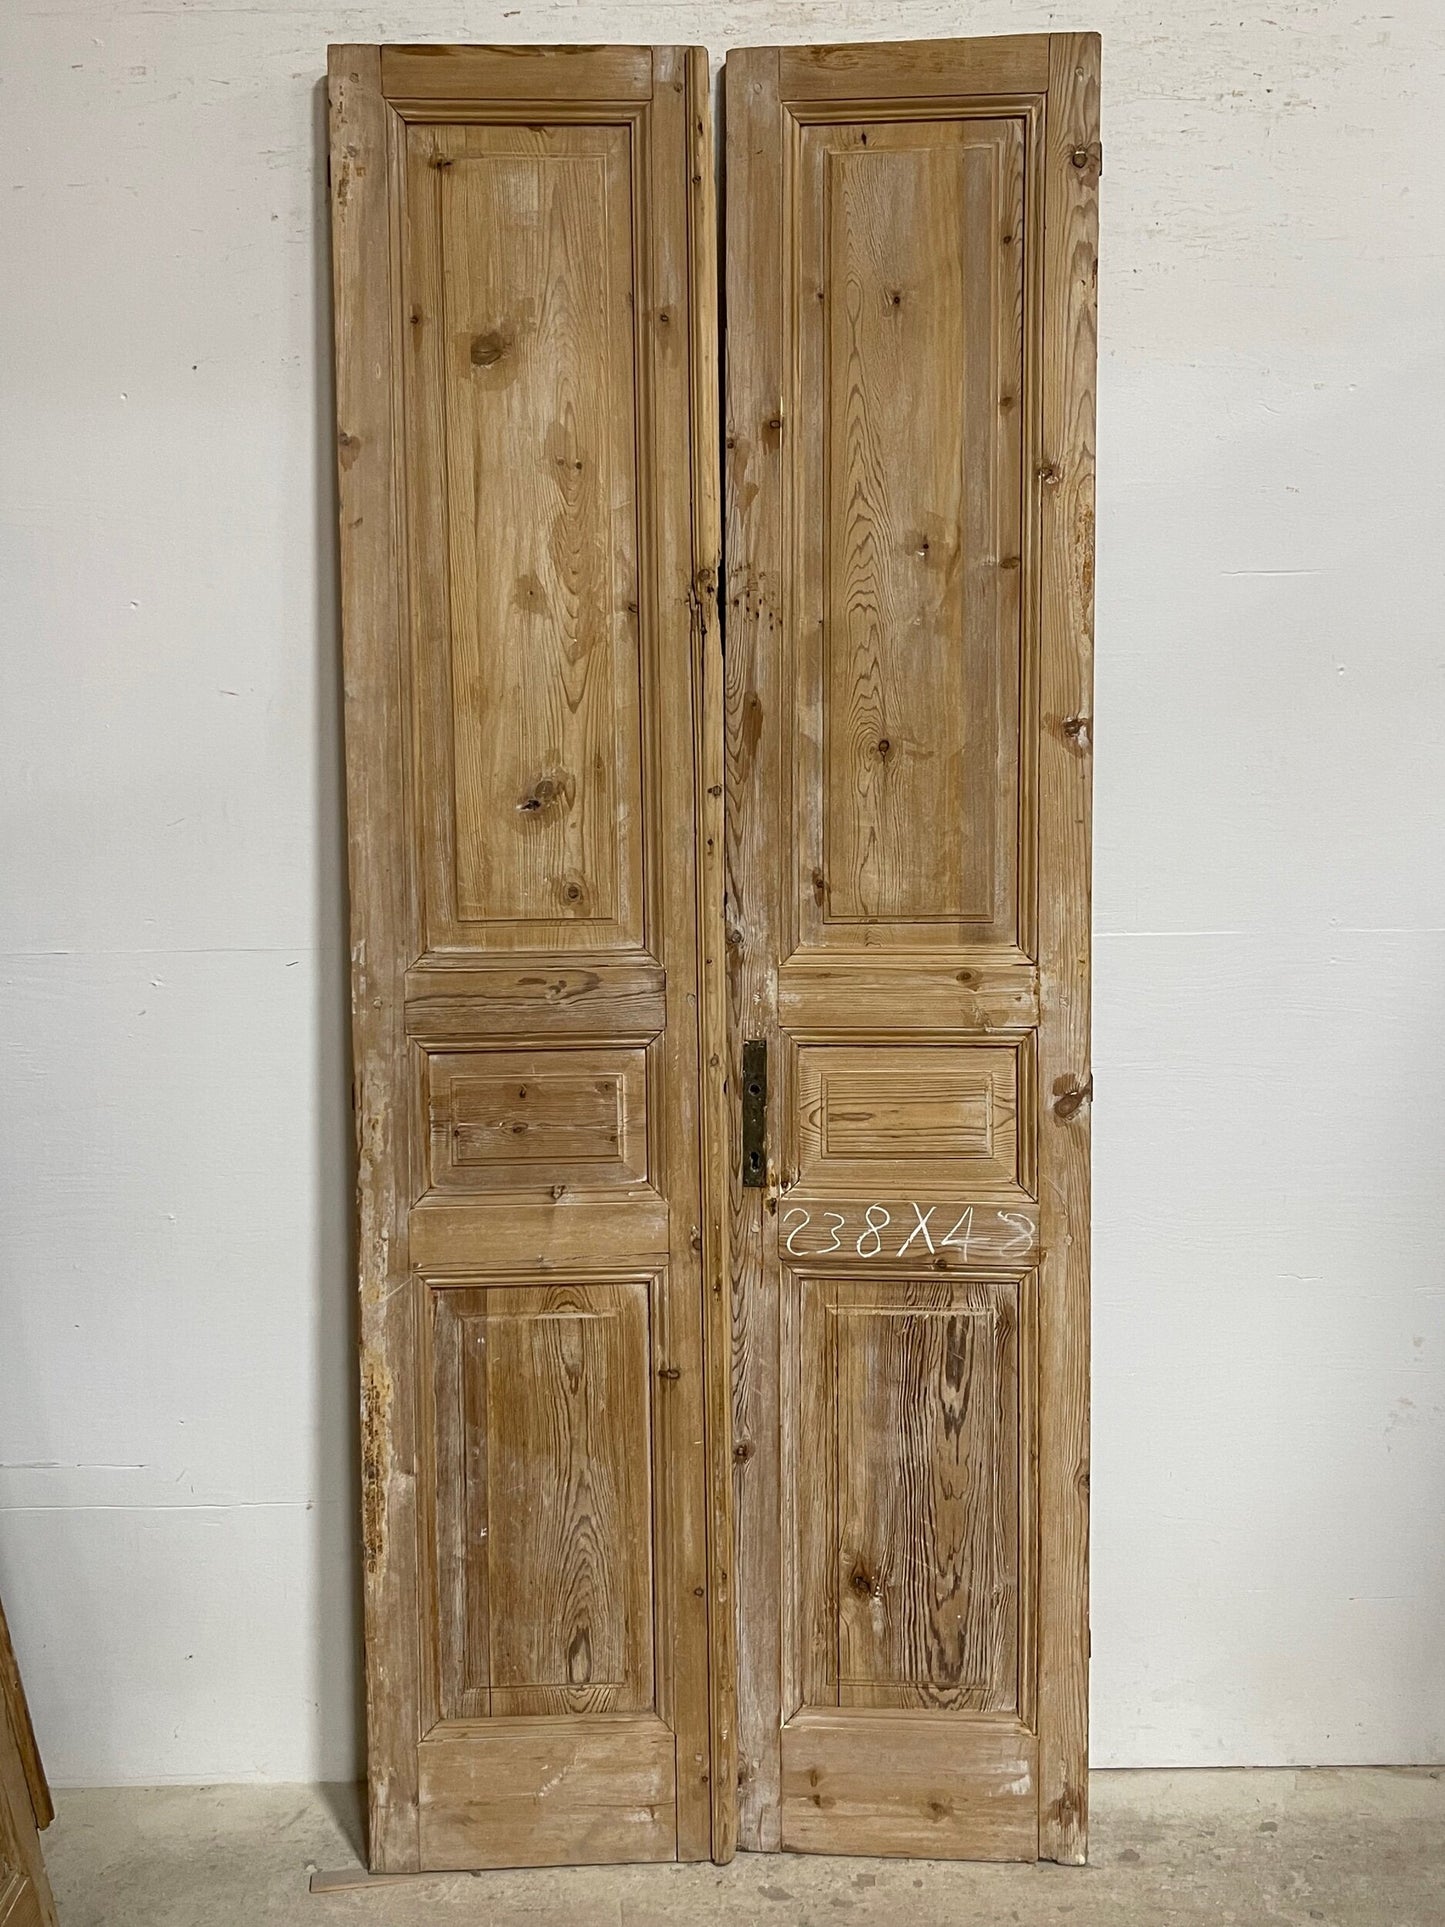 Antique French panel doors (93.75x38.25) I130